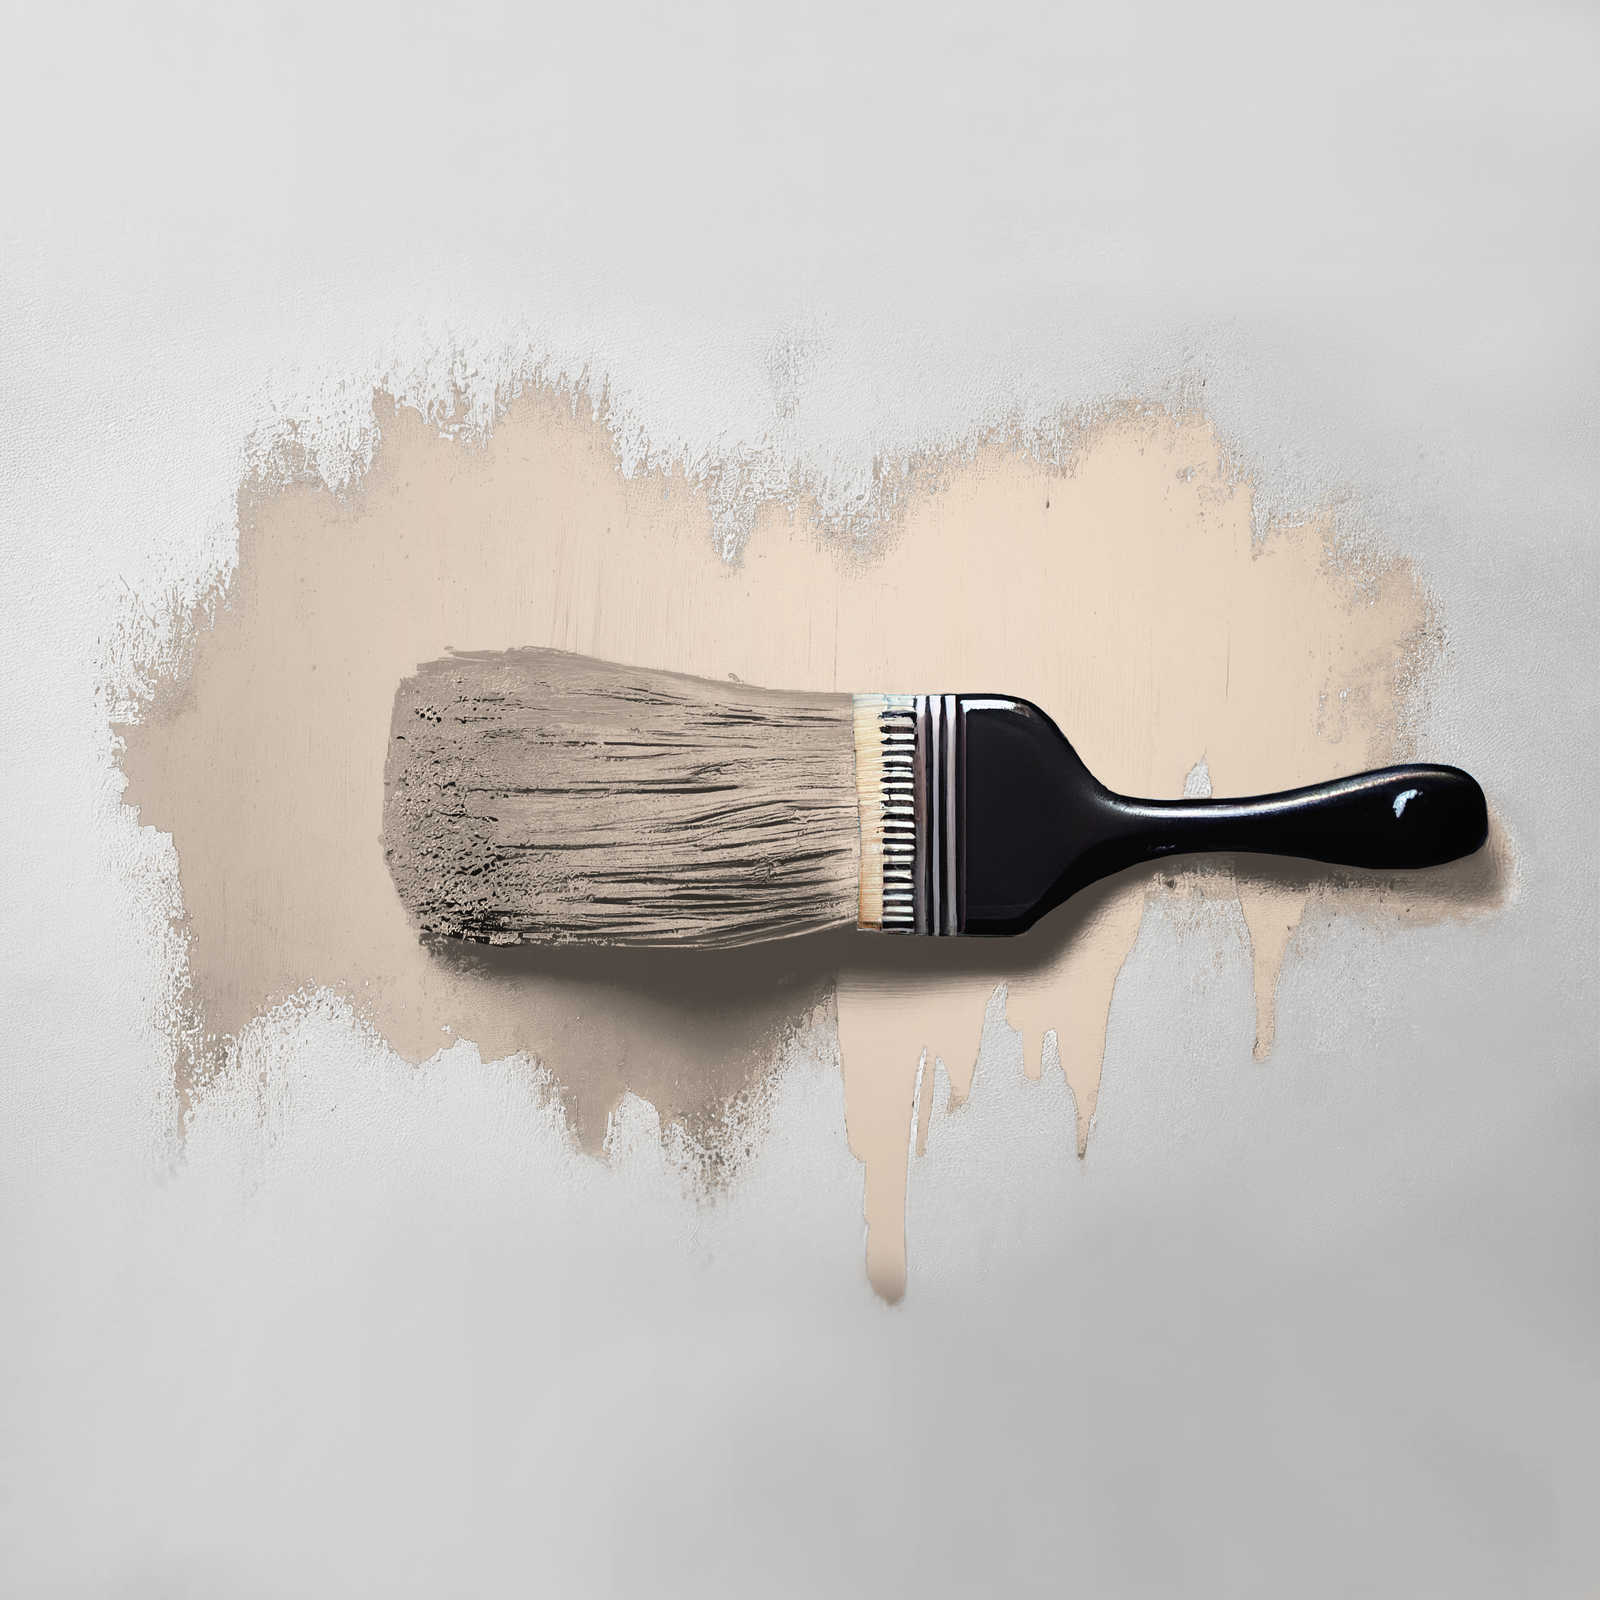             Pintura mural TCK6020 »Chalky Chickpeas« en beige claro fresco – 5,0 litro
        